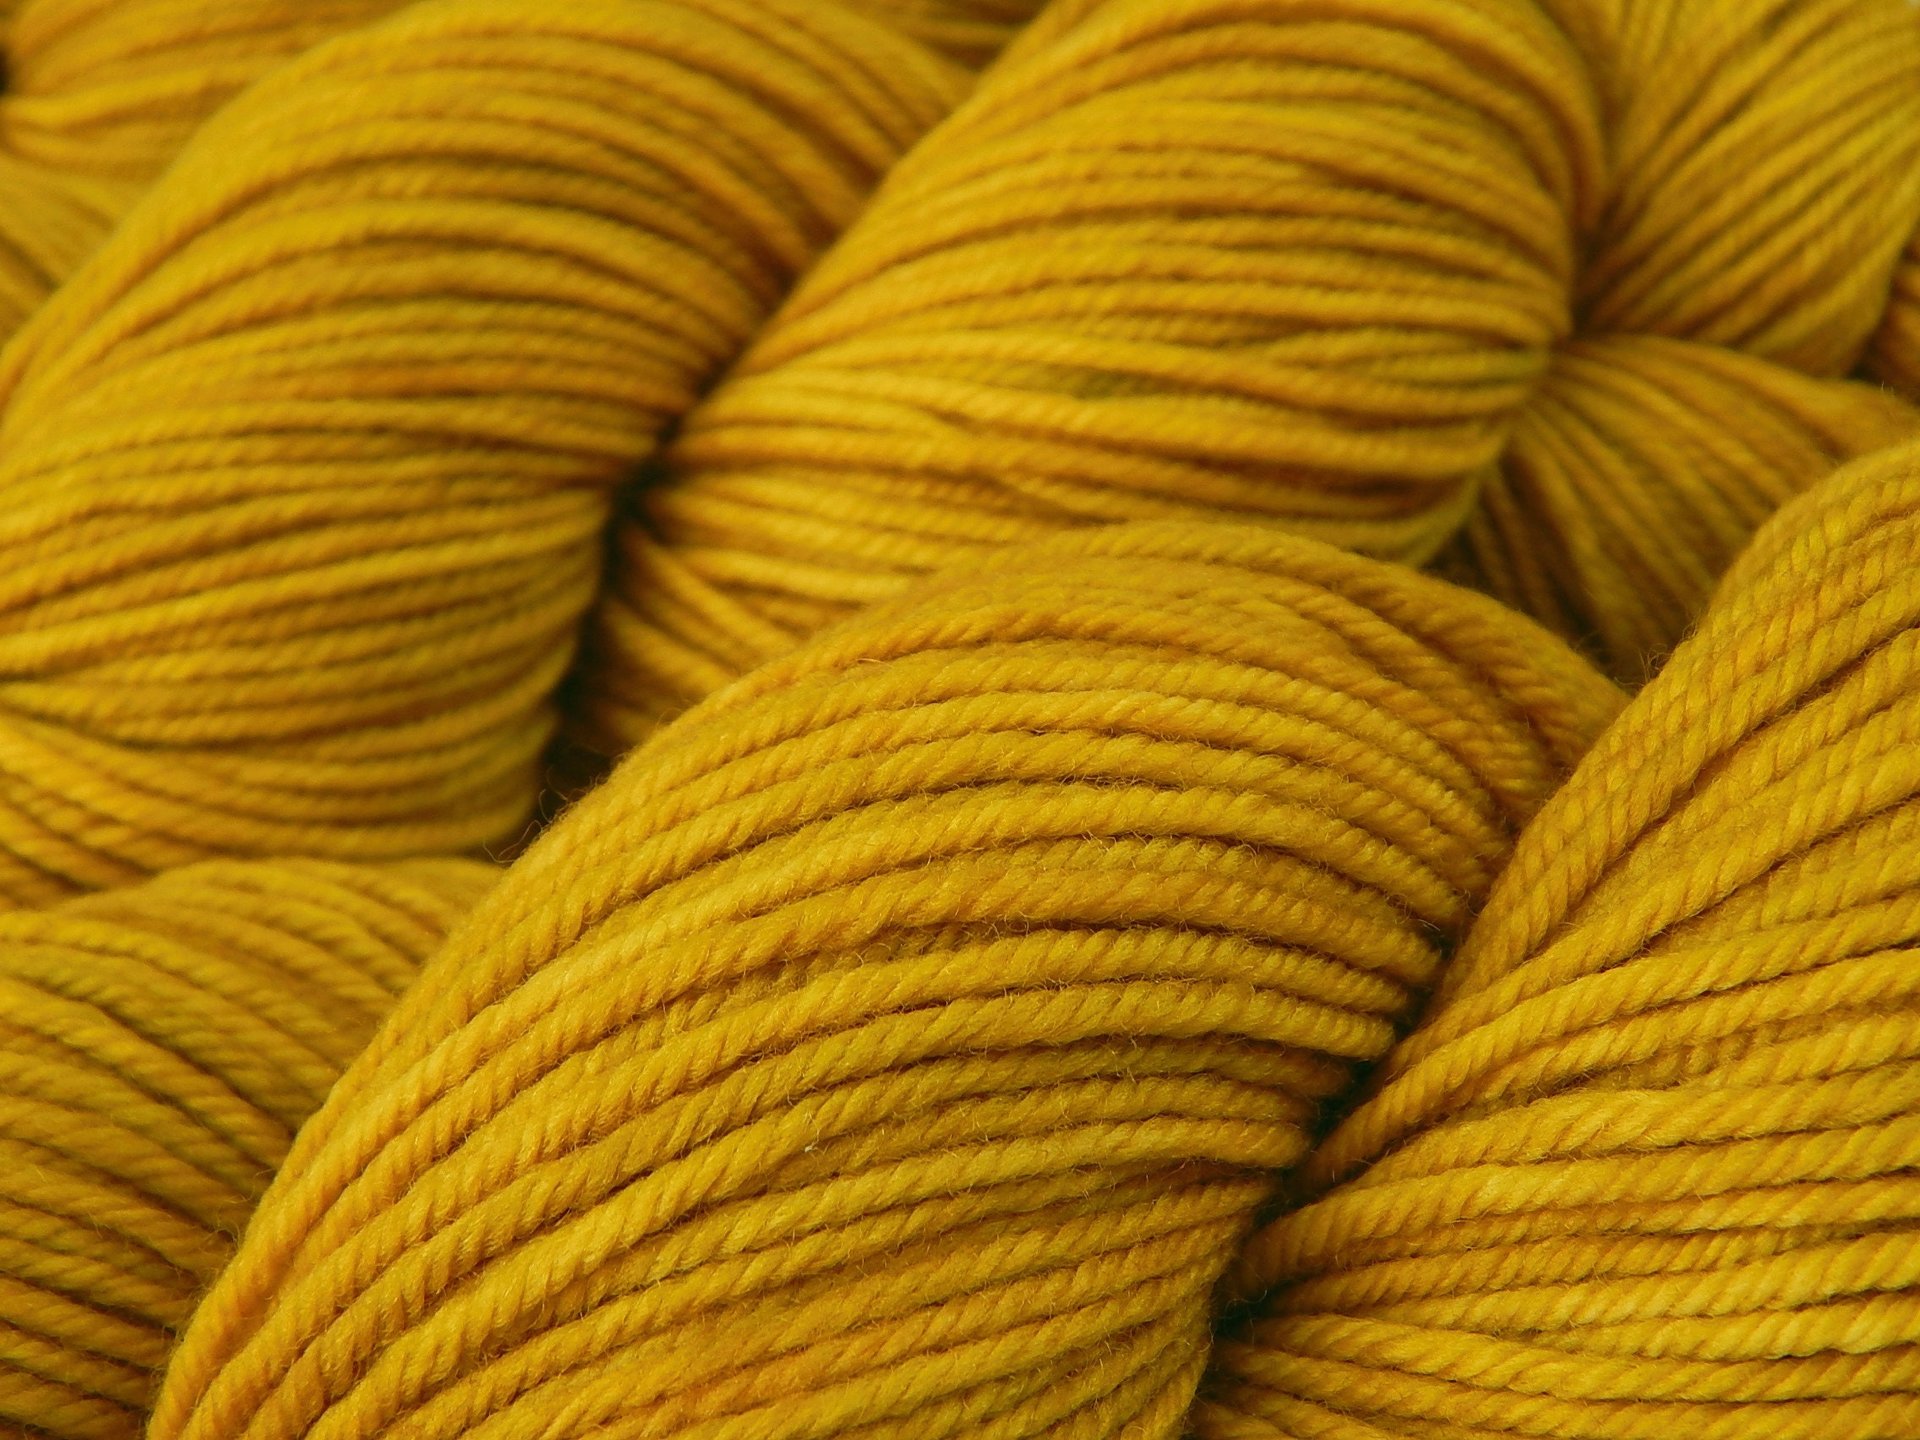 Hand Dyed Yarn, DK Weight Superwash Merino Wool - Honey Mustard - Soft Tonal Yellow Gold Indie Dyer Yarn, Wool Yarn for Knitting Crochet